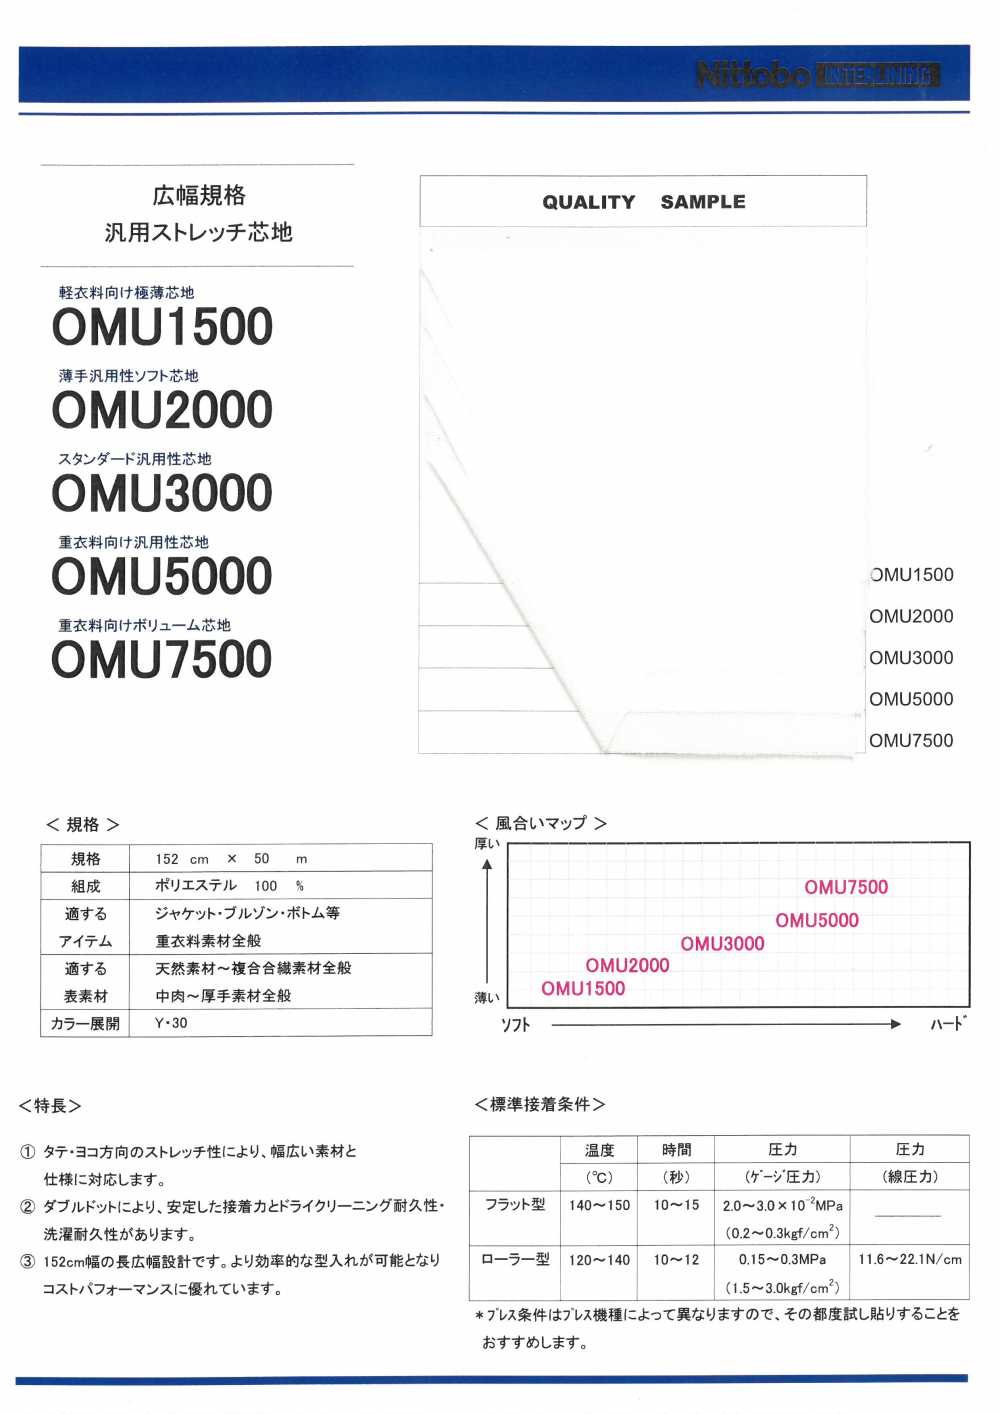 OMU5000 适用于厚重衣物的多功能衬布 50D 日东纺绩